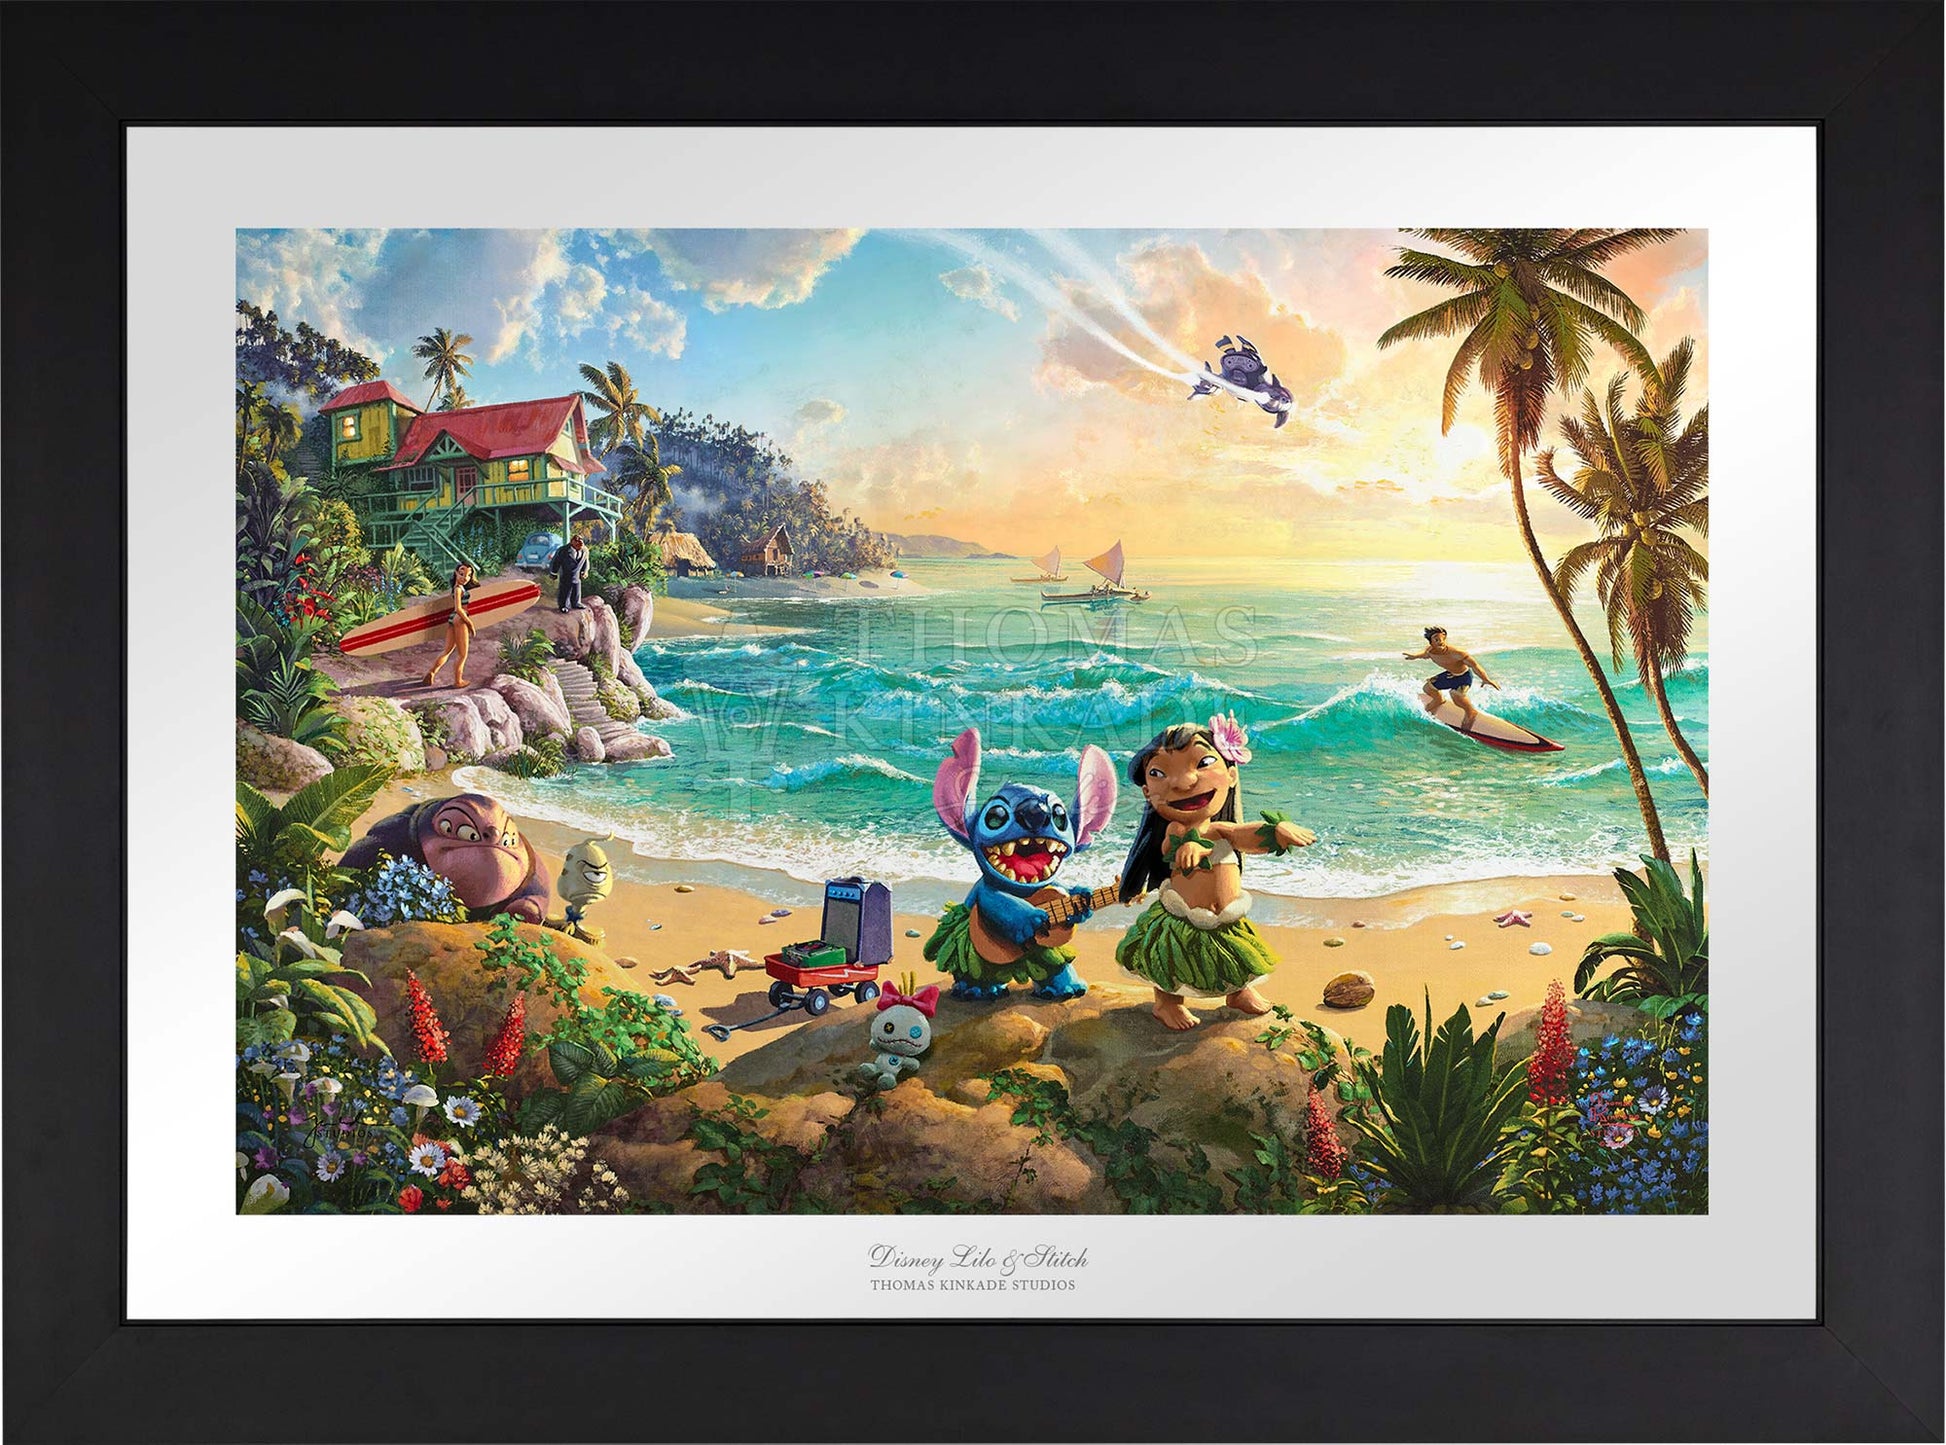 Disney Lilo & Stitch - Limited Edition Paper – Thomas Kinkade Studios